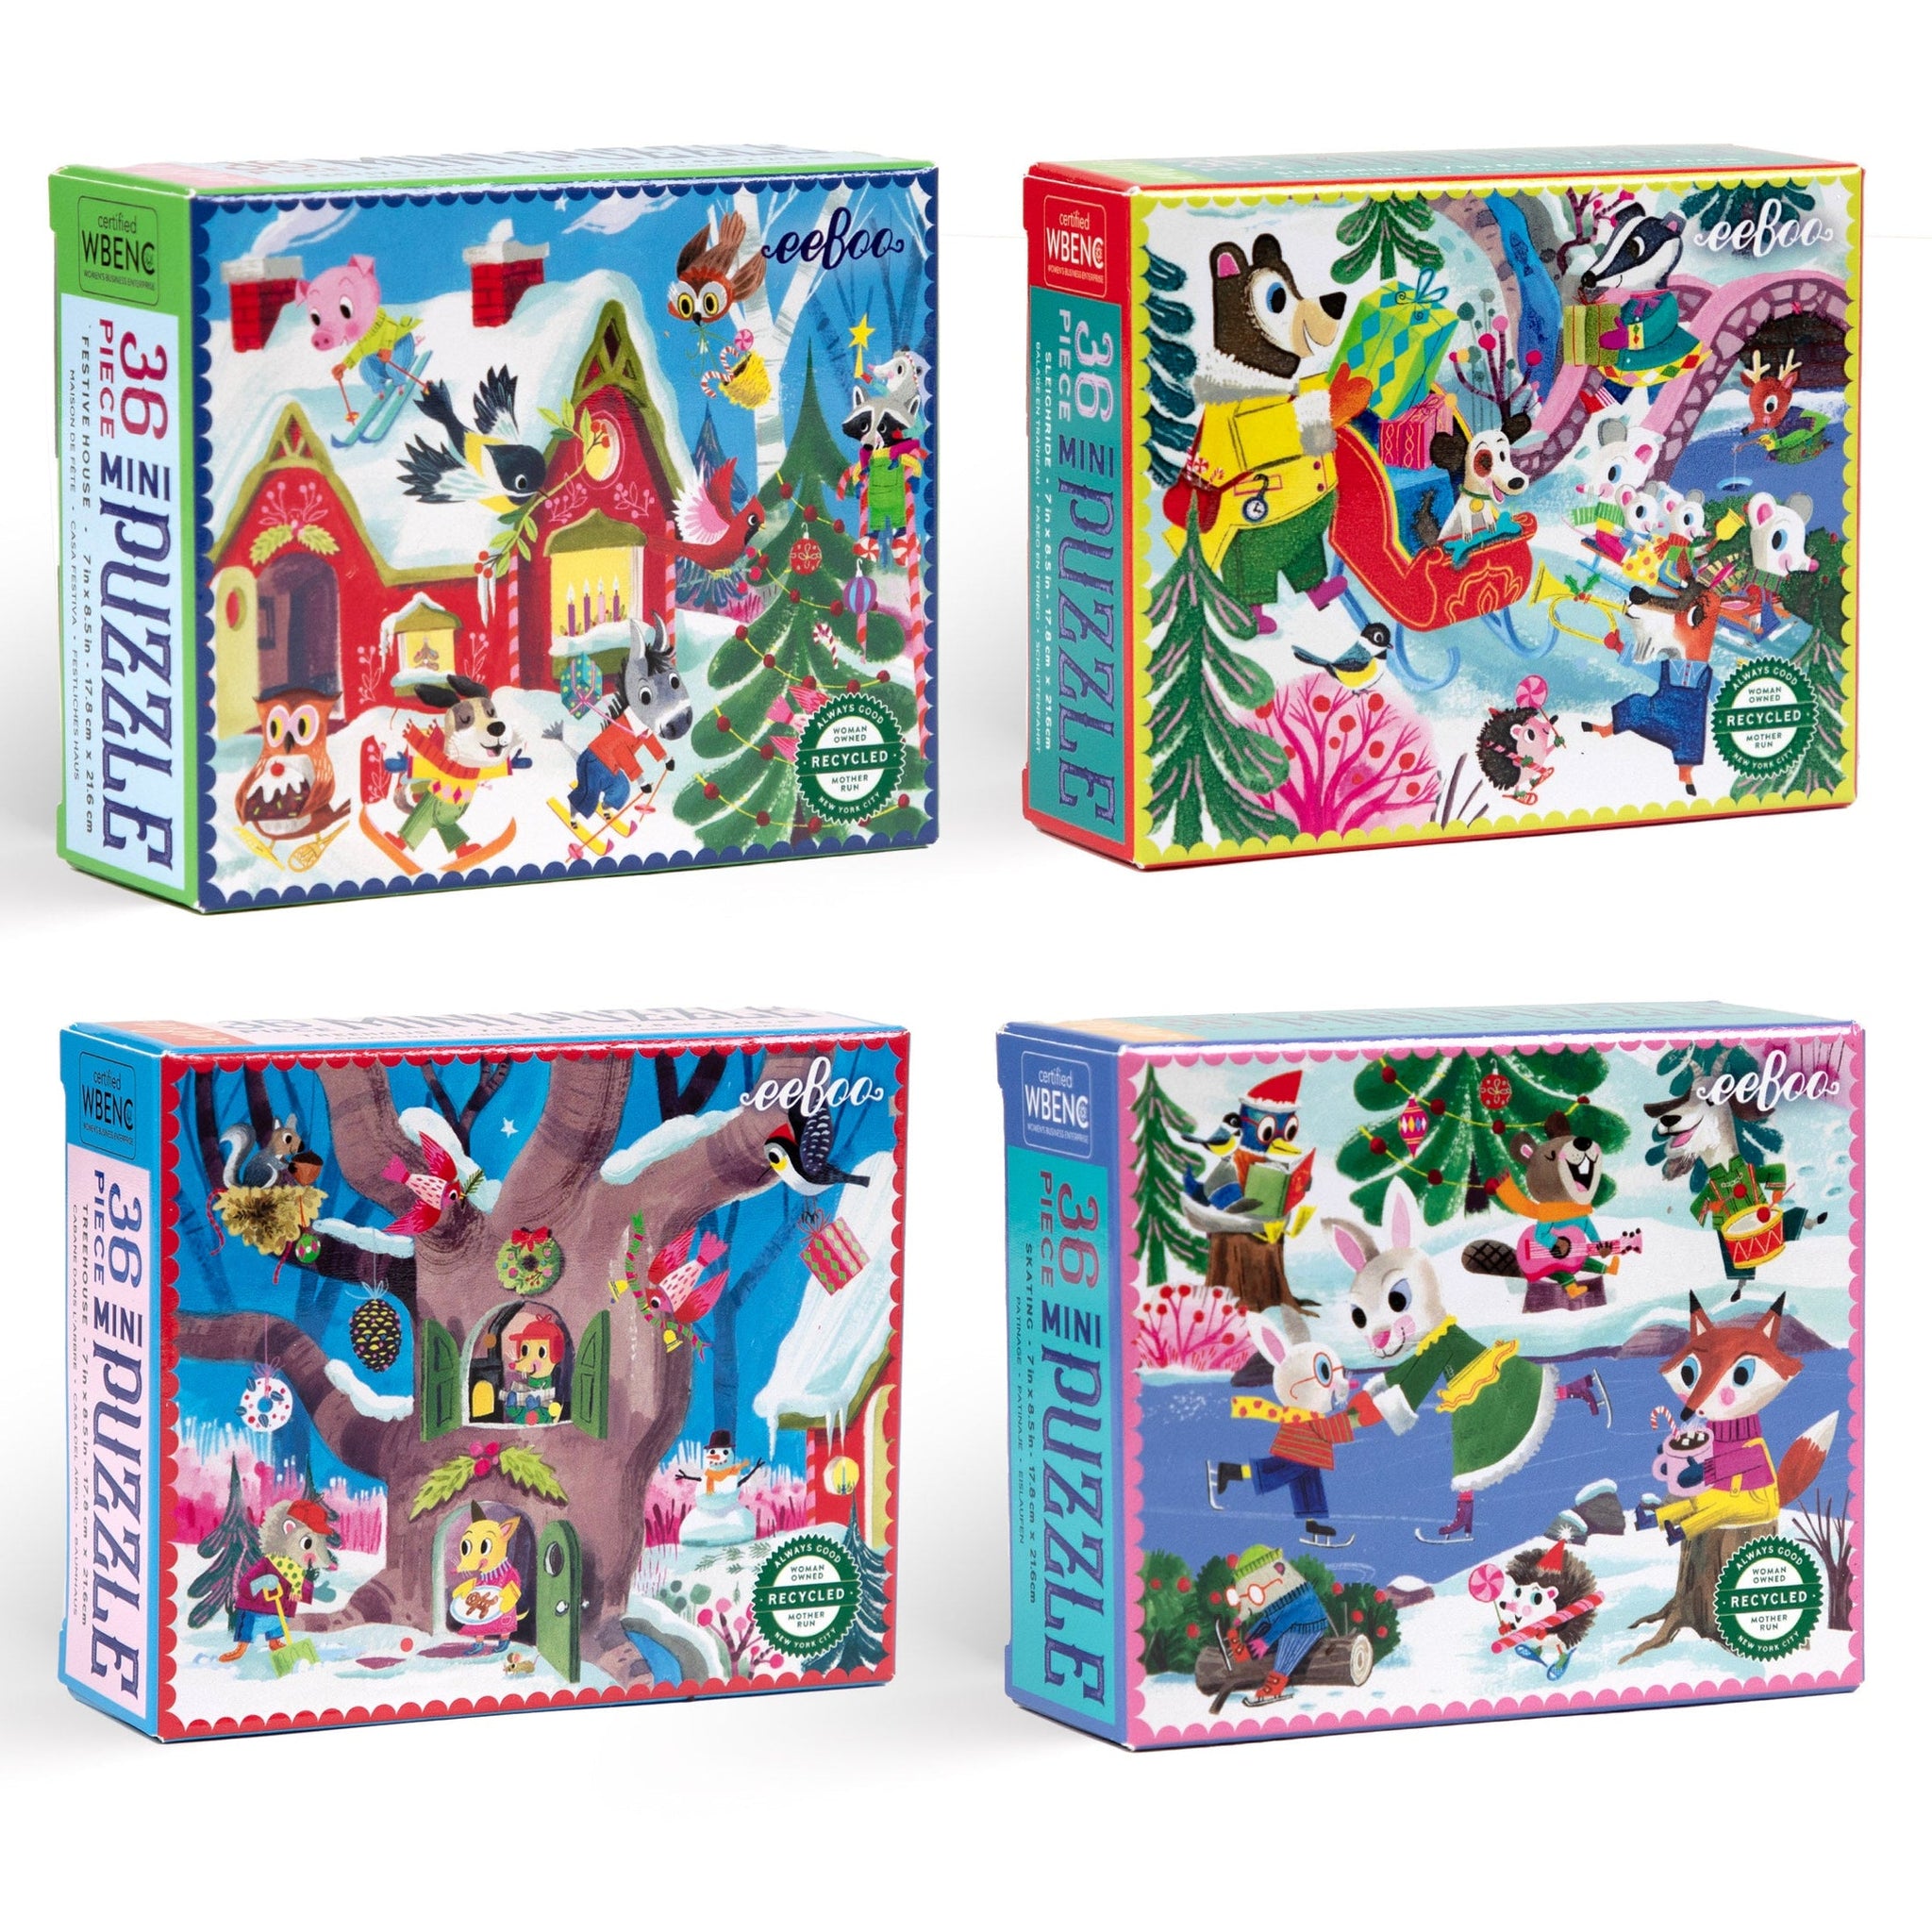 Mini Puzzles- eeBoo Holiday 36 piece